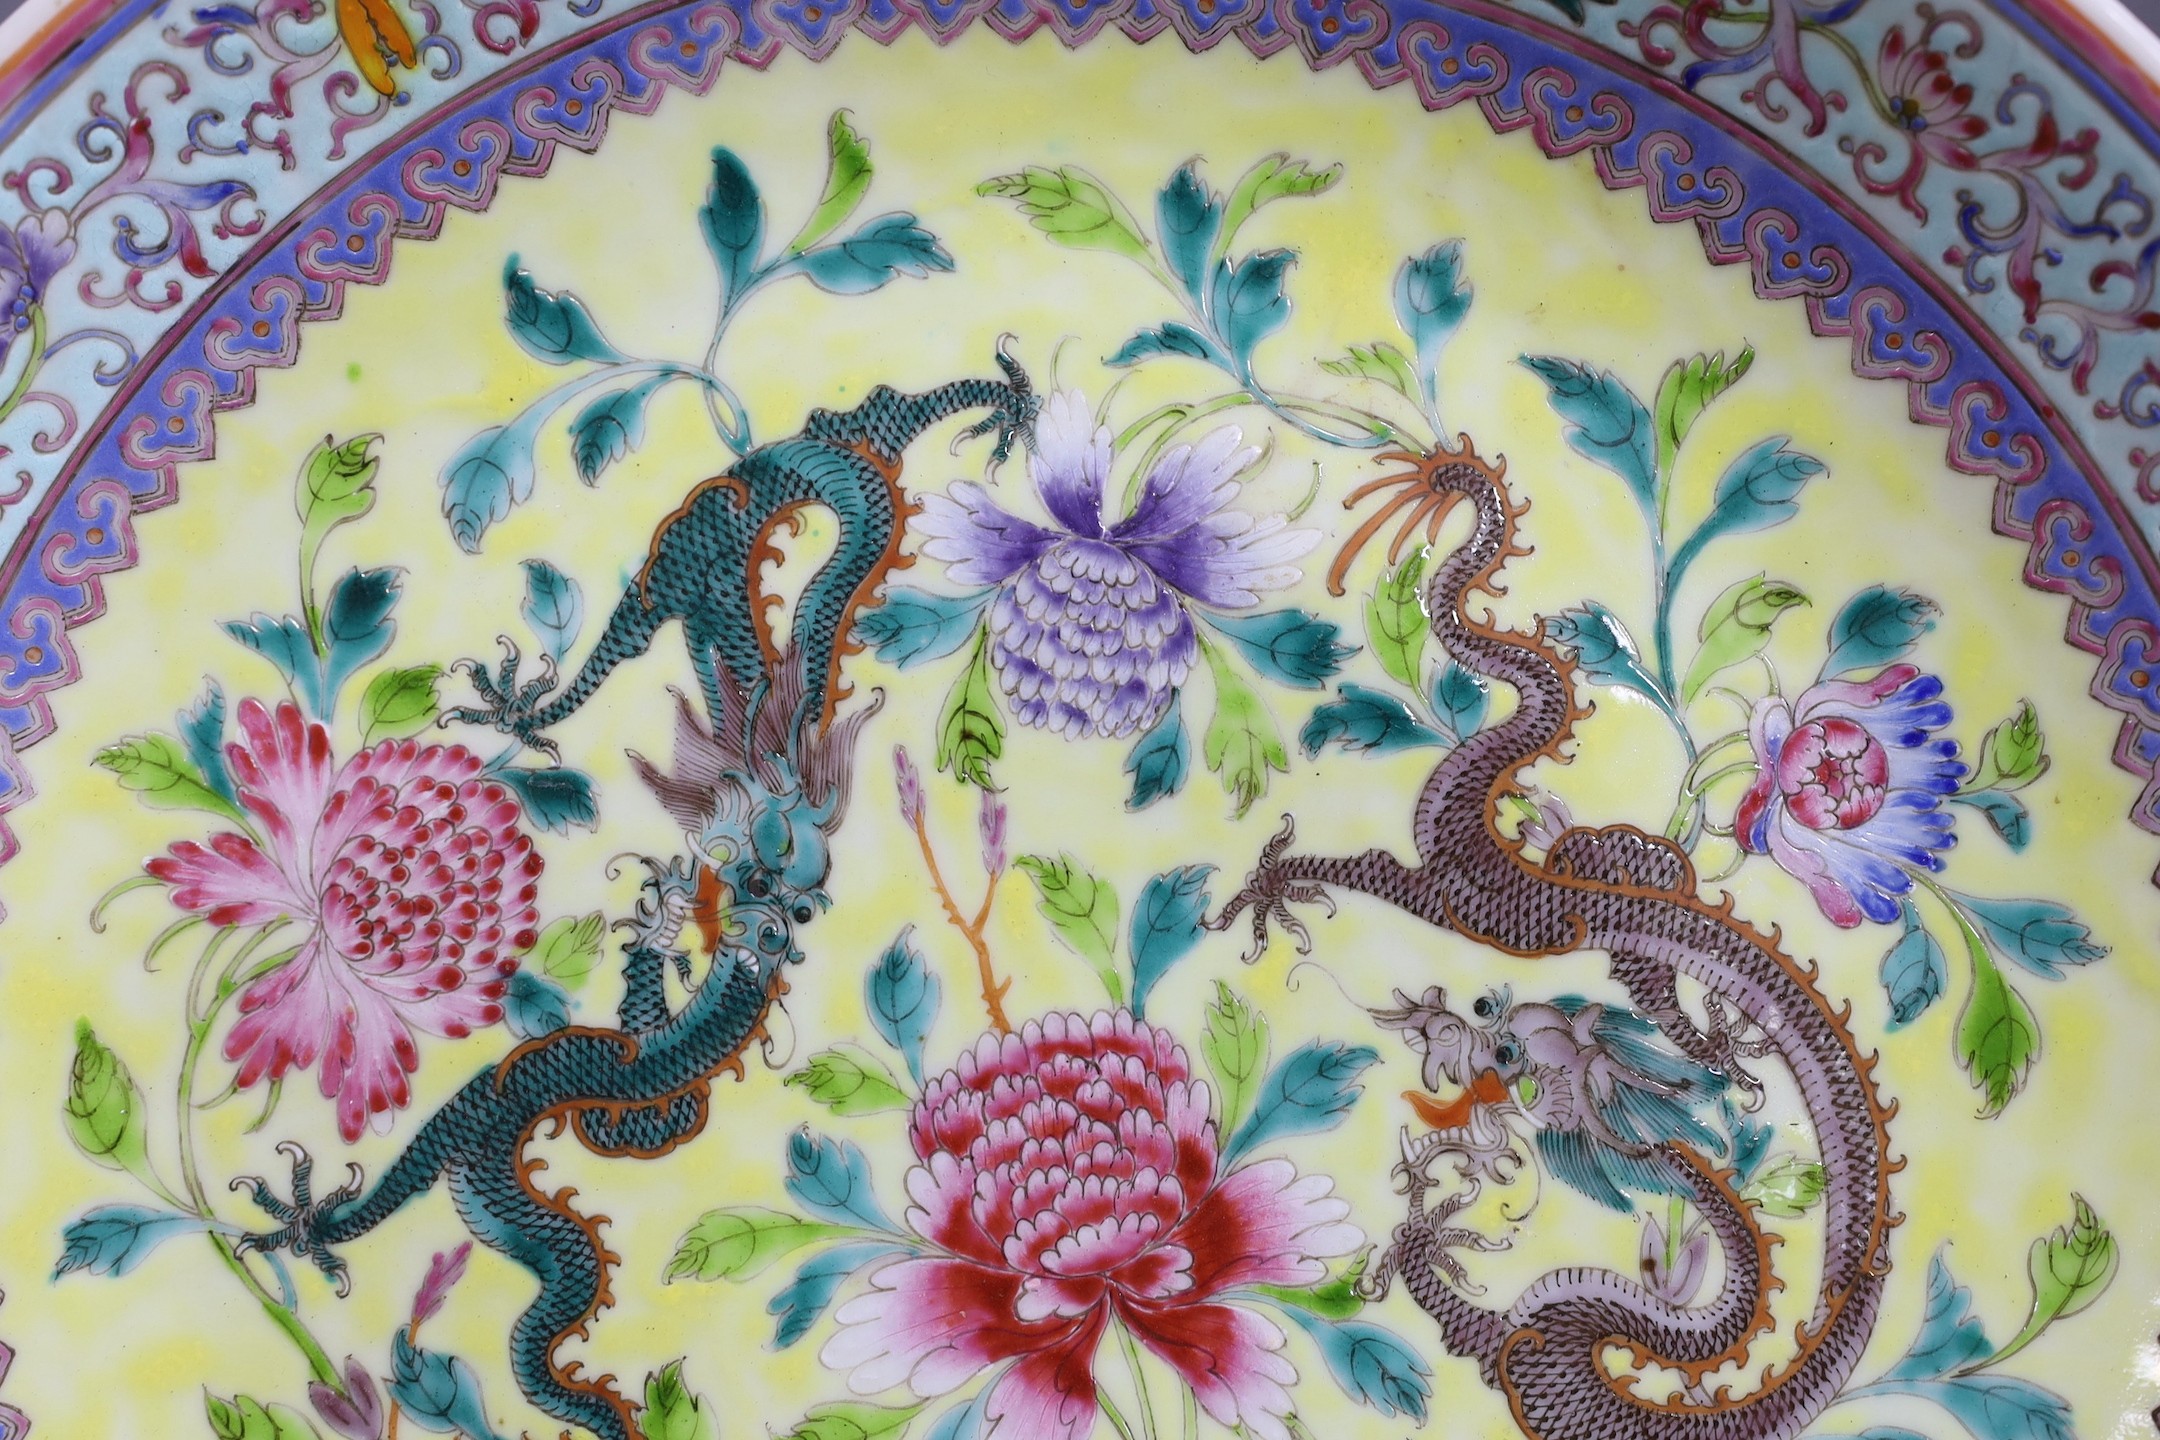 A Chinese yellow ground ‘dragon’ dish, Qianlong mark but Republic period, 34 cms diameter.